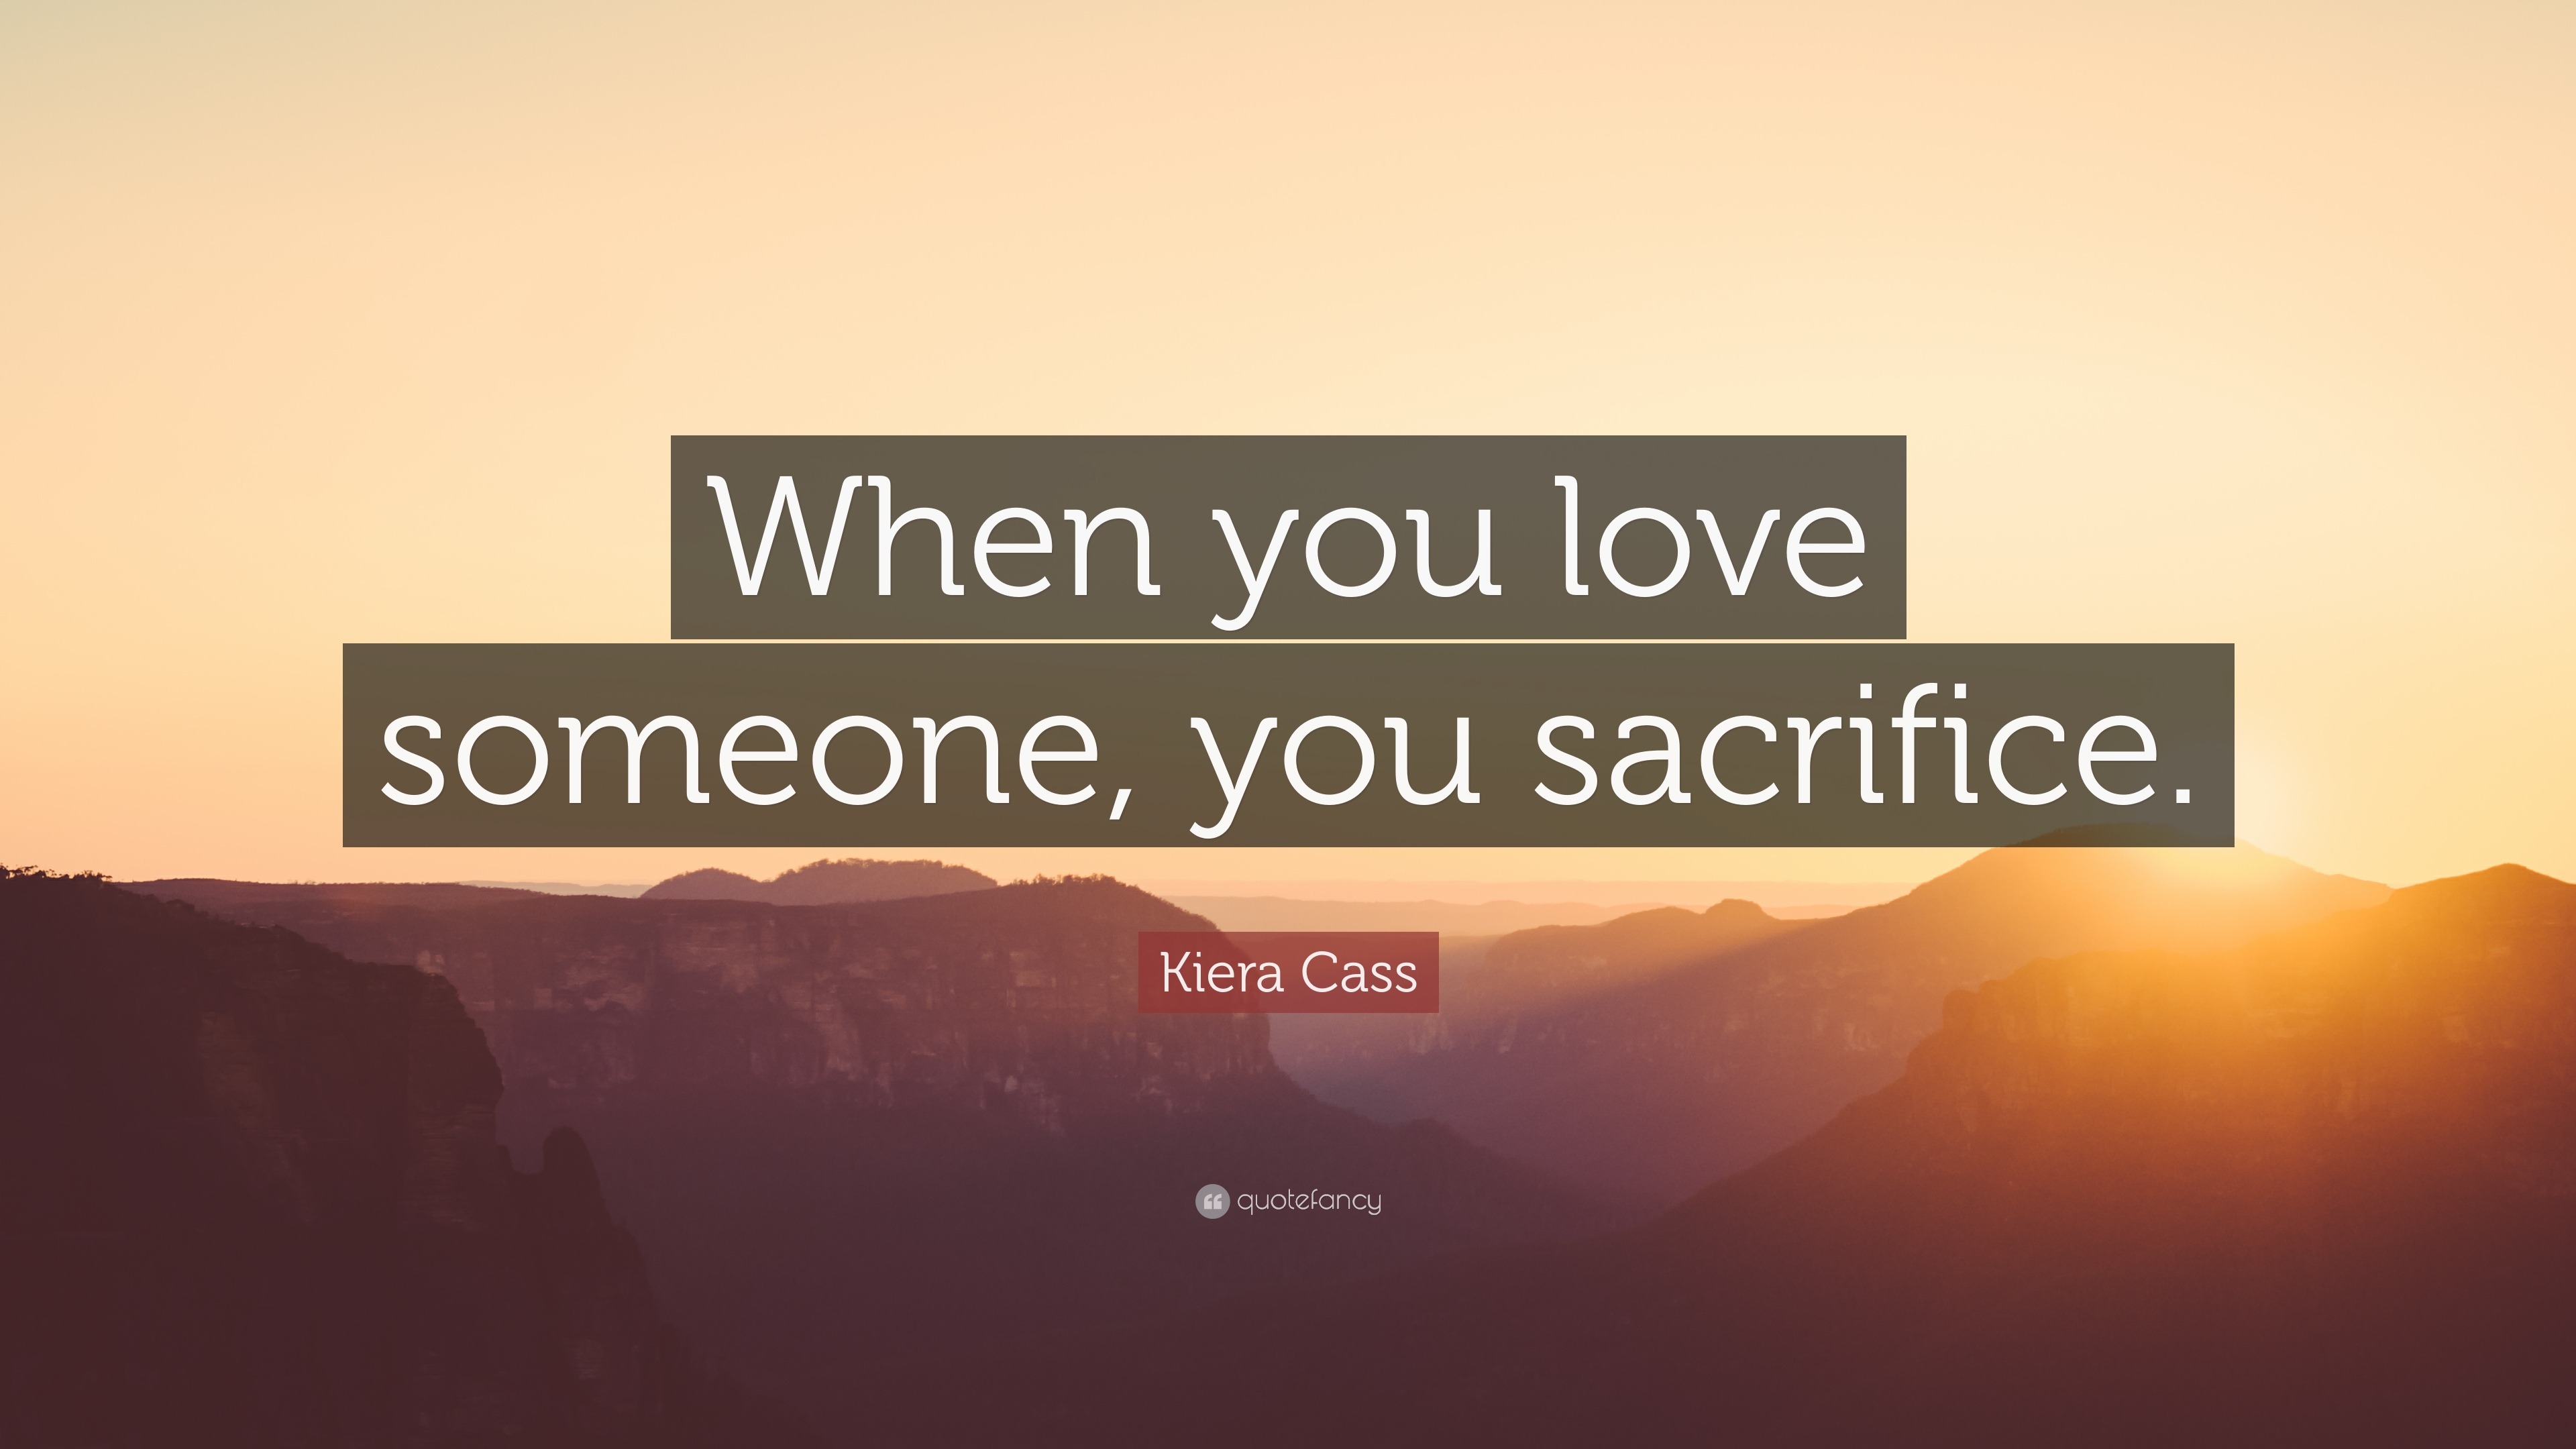 Kiera Cass Quote “When you love someone you sacrifice ”